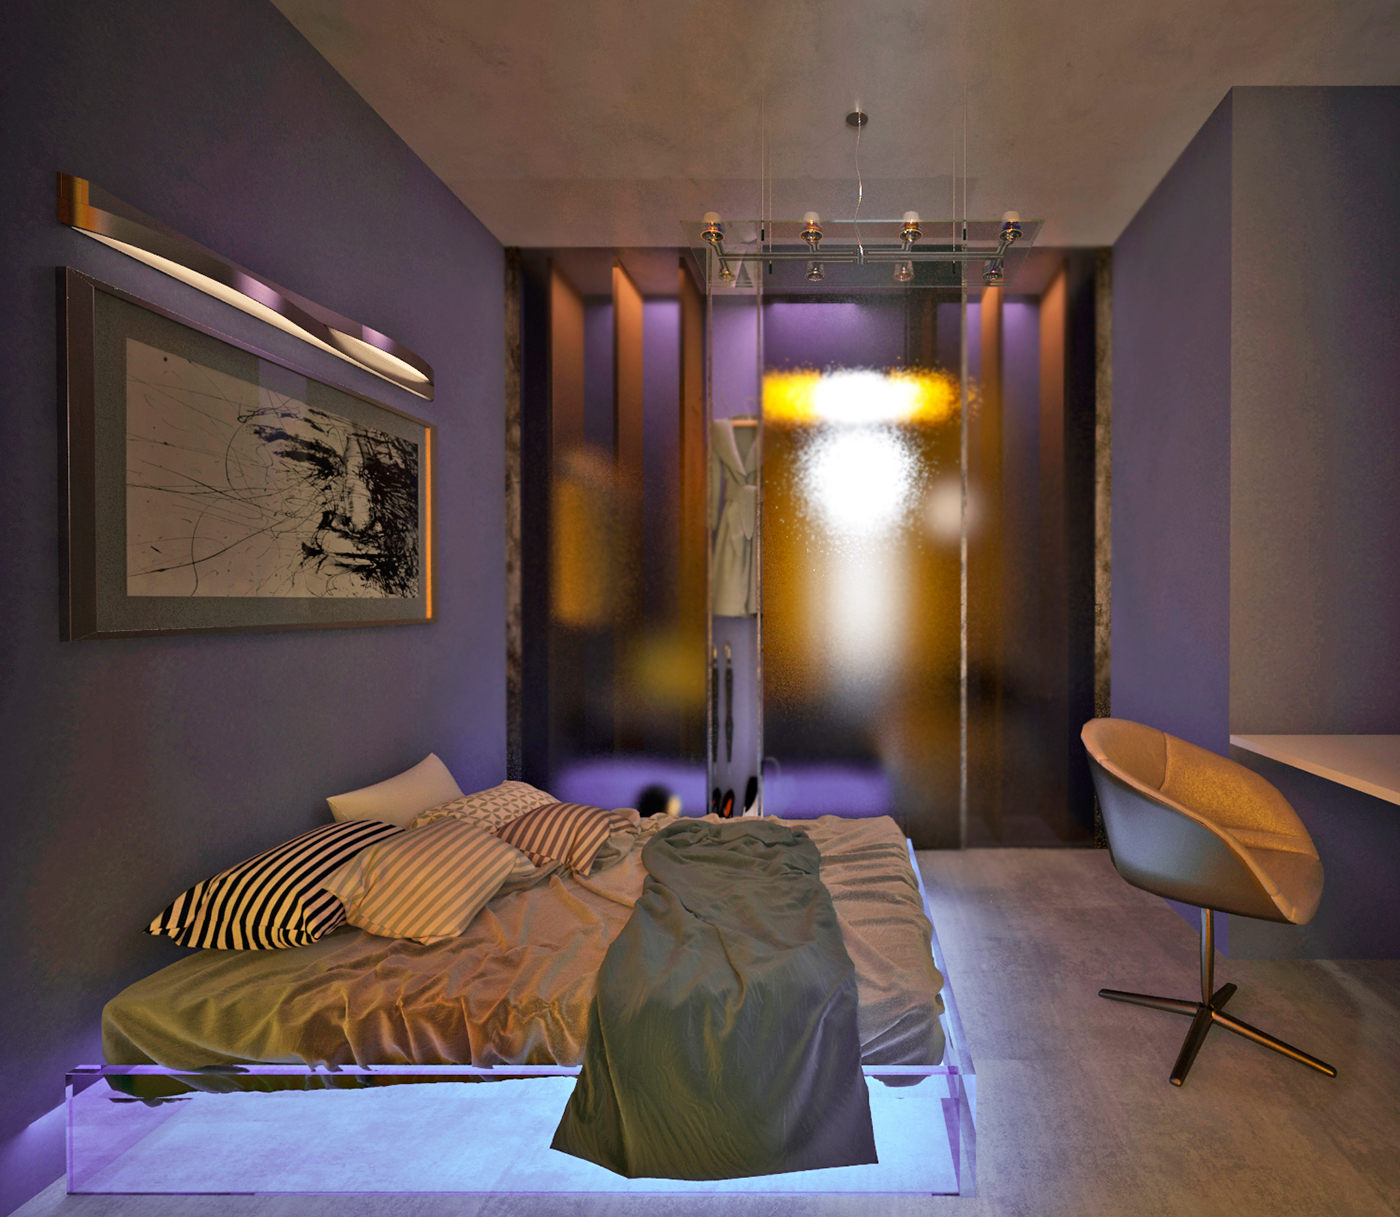 hi-tech minimalistic glass metal Interior vray light bathroom violet purple blue stone tv set kitchen contemporary